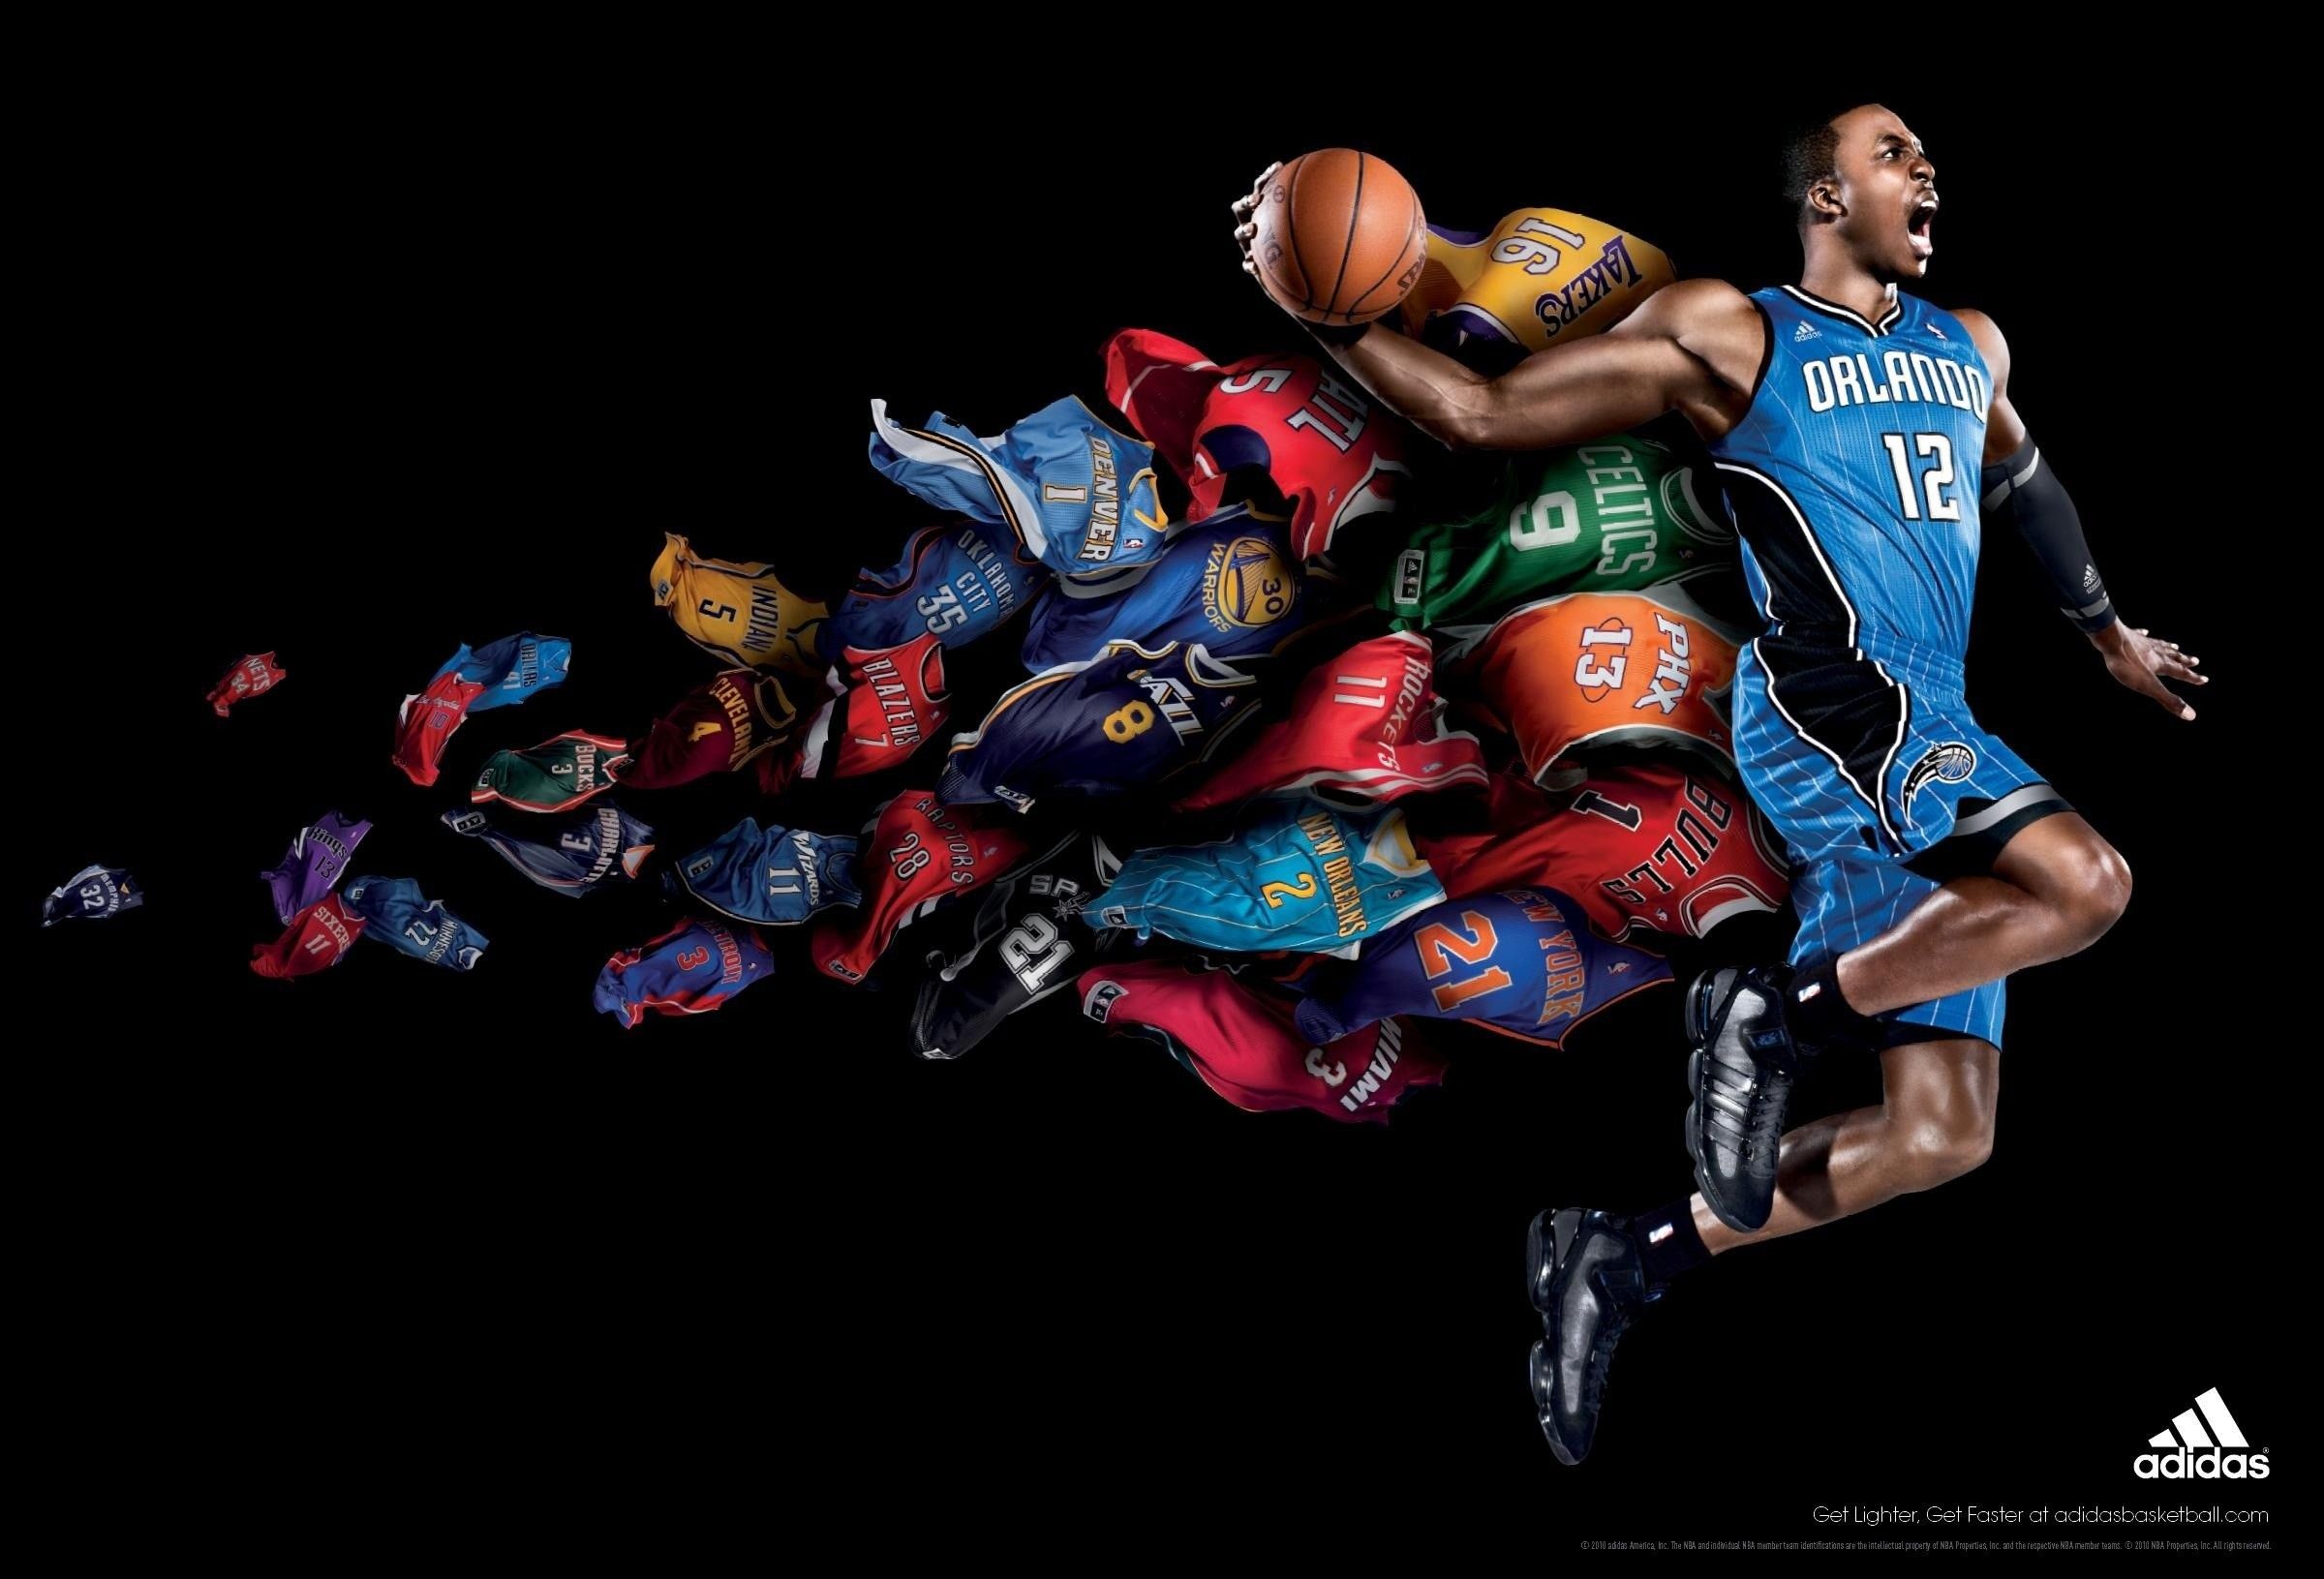 Cool 3D Wallpaper HD Basketball (más de 68 imágenes)